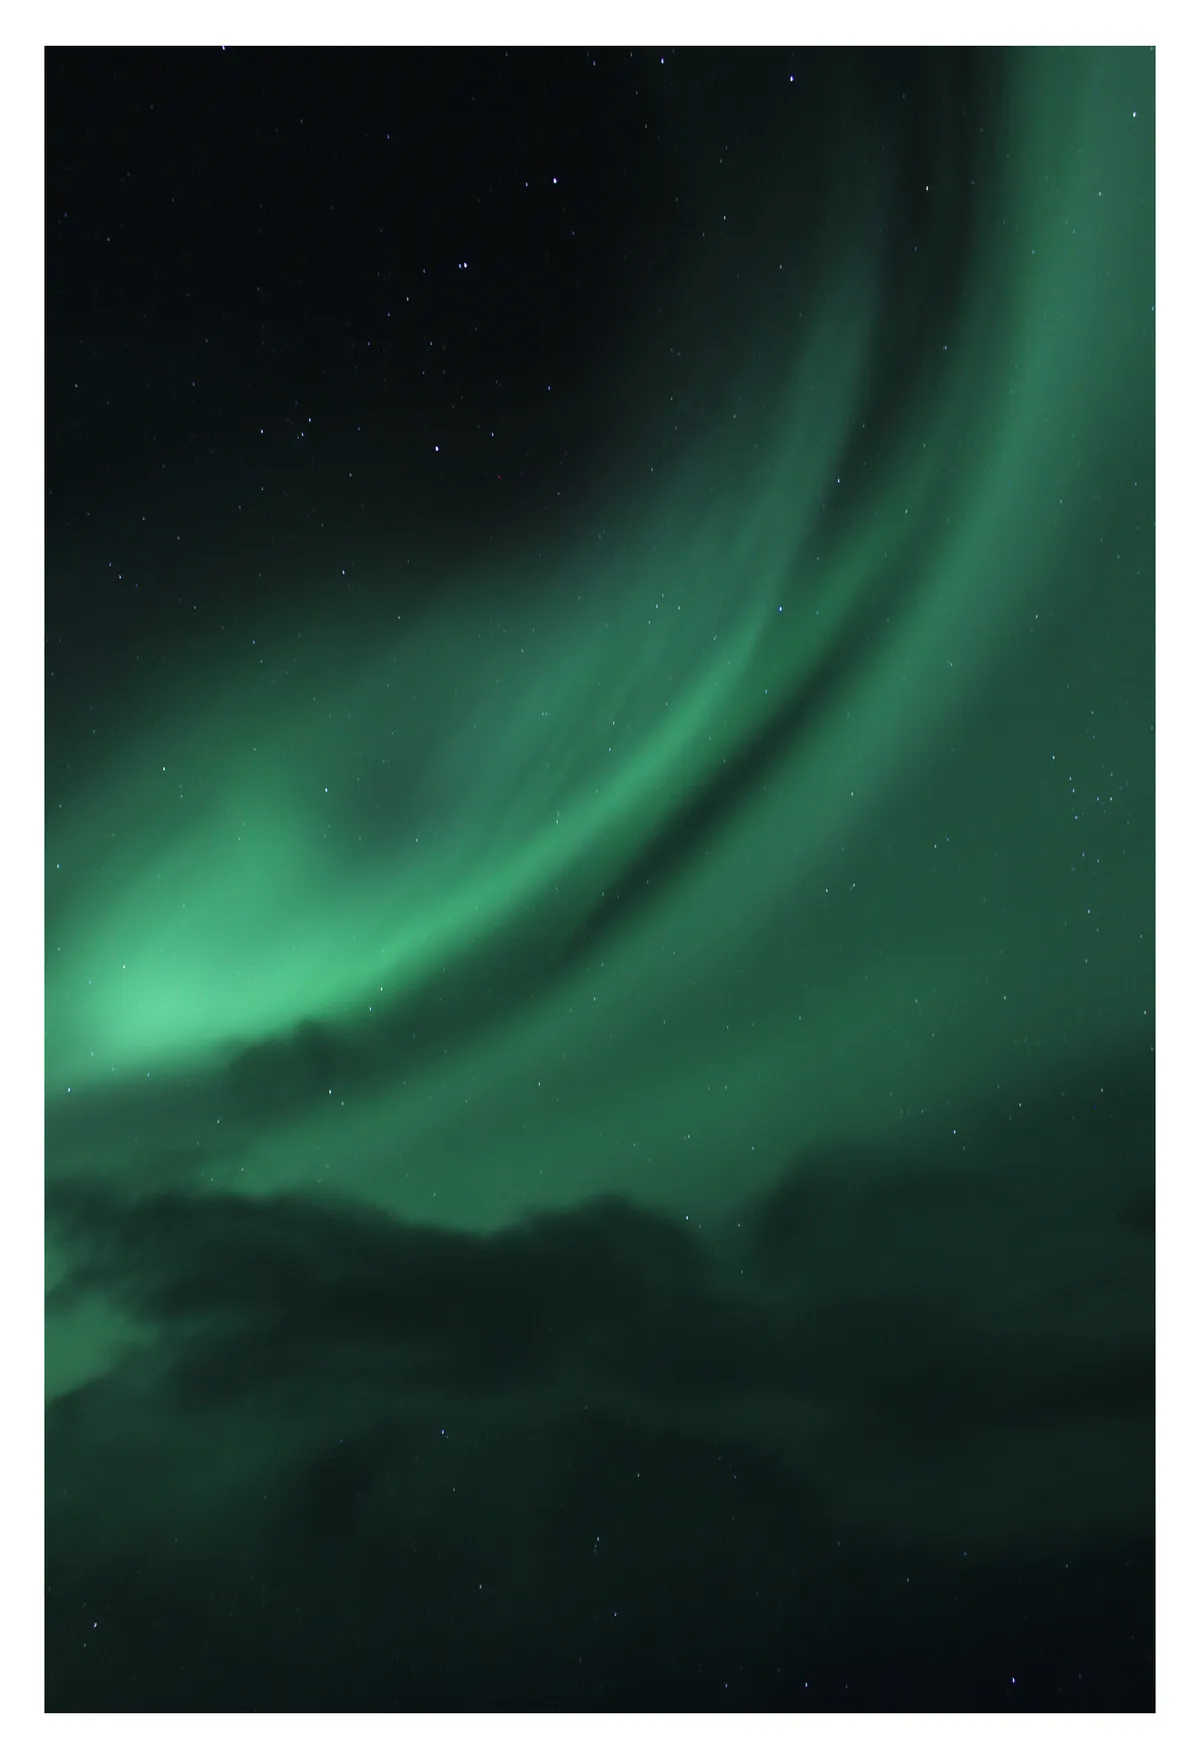 Aurora Over Iceland Stuart Woodall, Hali, Iceland. Equipment: Canon EOS 550D DSLR camera.